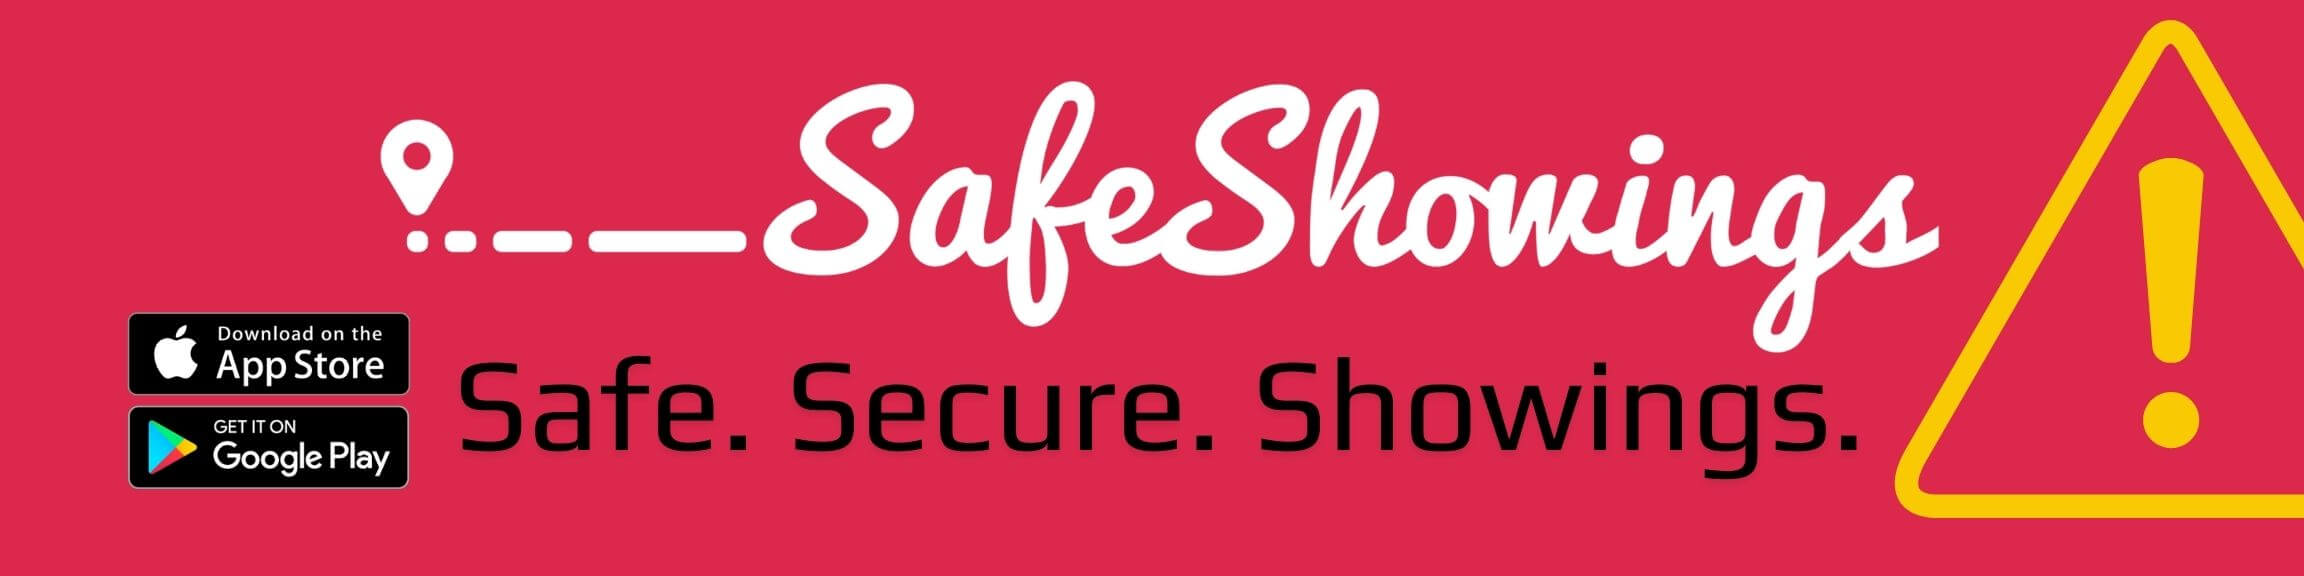 Safeshowings